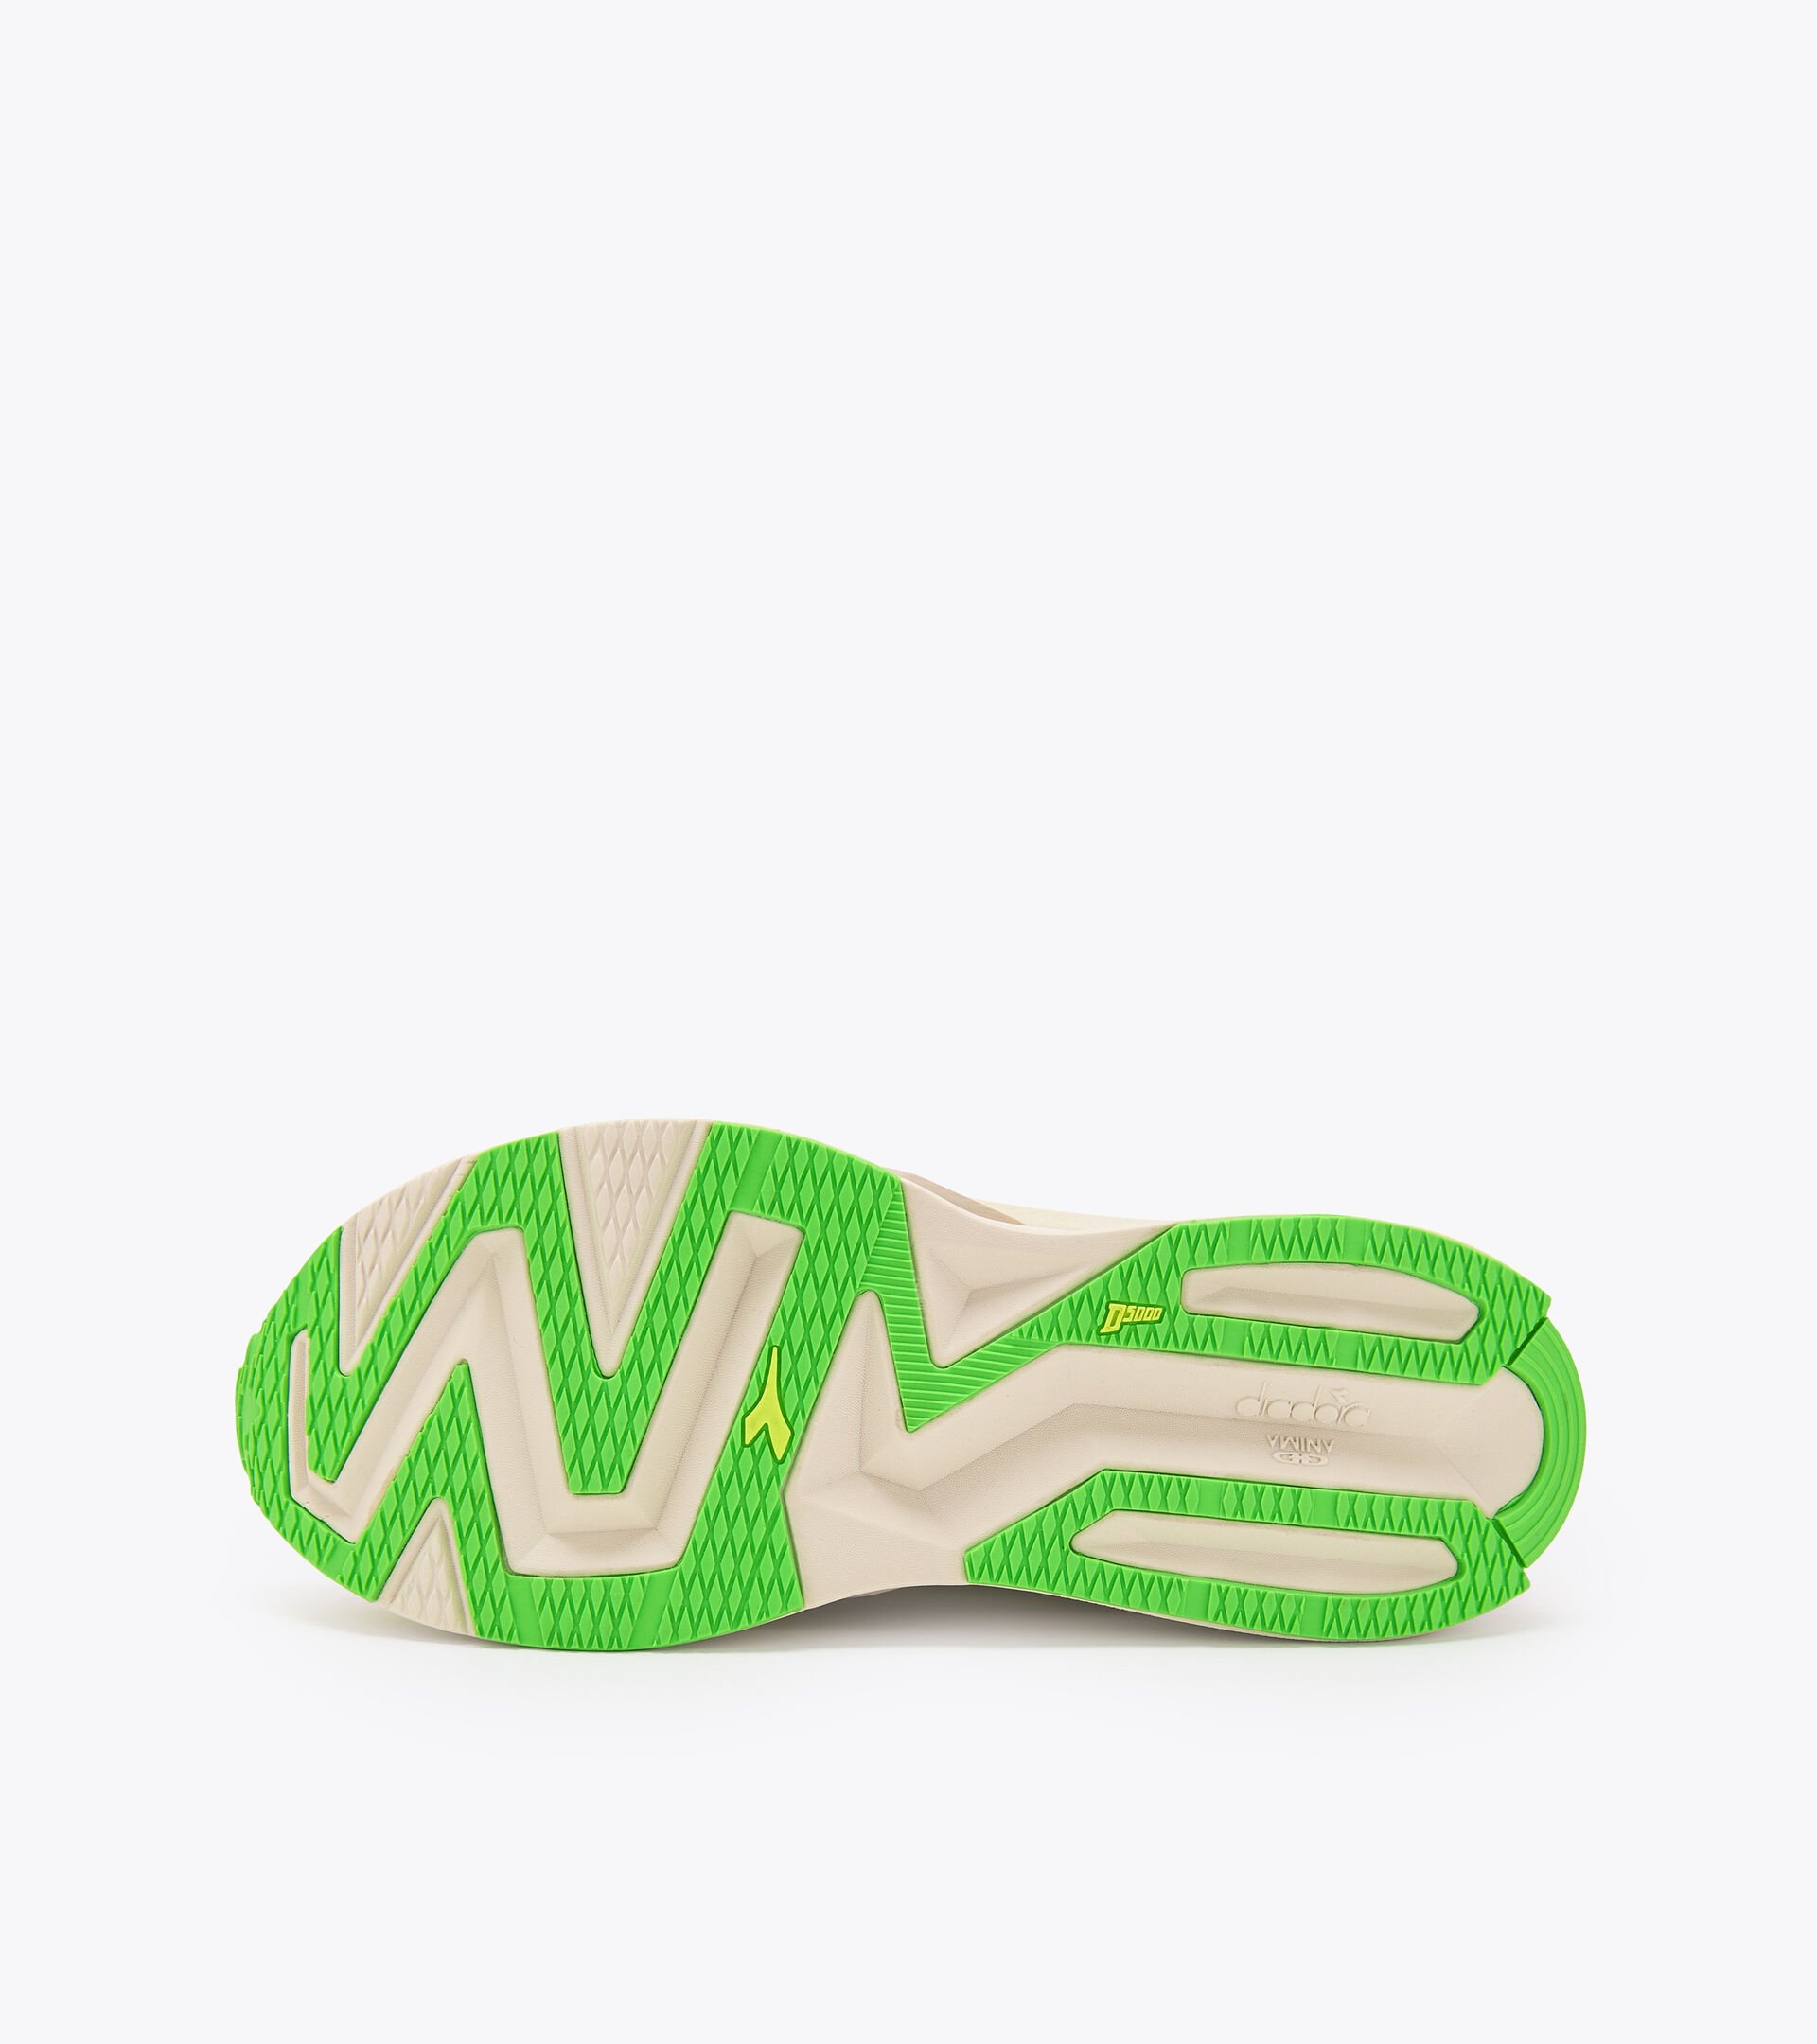 Made in Italy Running shoes - Gender neutral ATOMO V7000 SMOKE GRAY/WHT/WHISPER WHT - Diadora